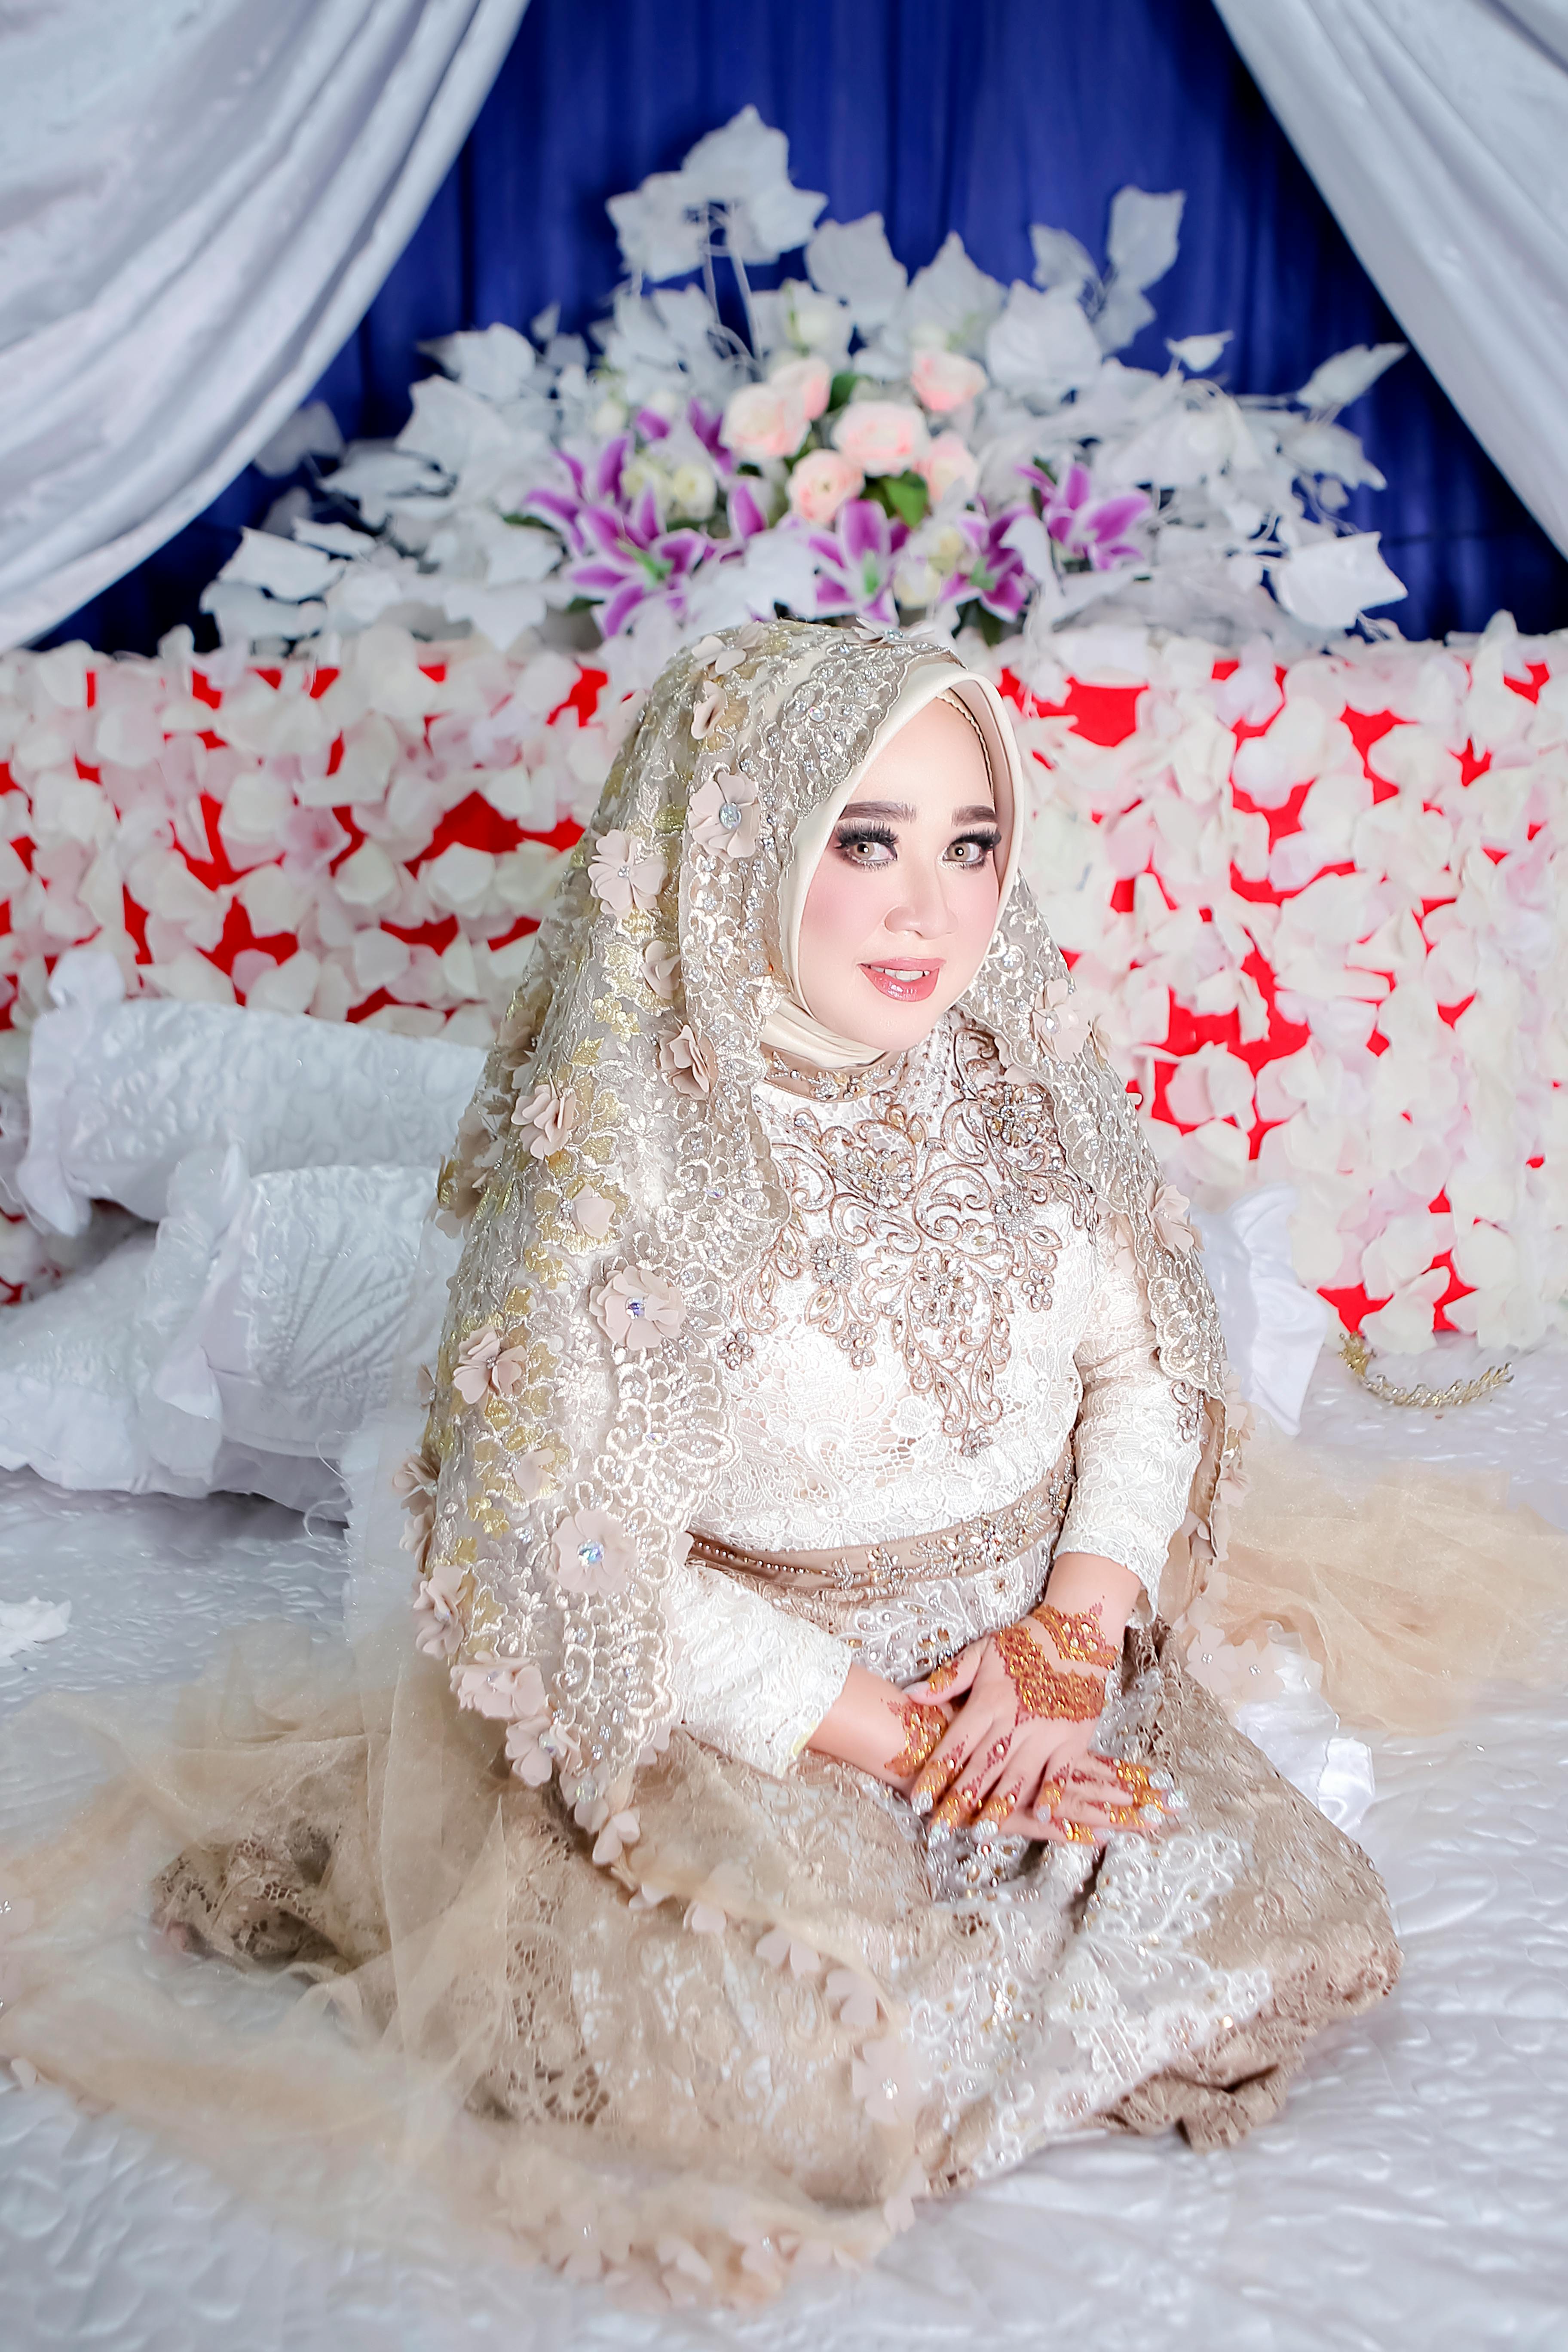 Elegant Muslim Wedding Gown For Bride 2023 Appliques Flowers Arabic Dubai  Long Sleeves Bridal Dress on Luulla